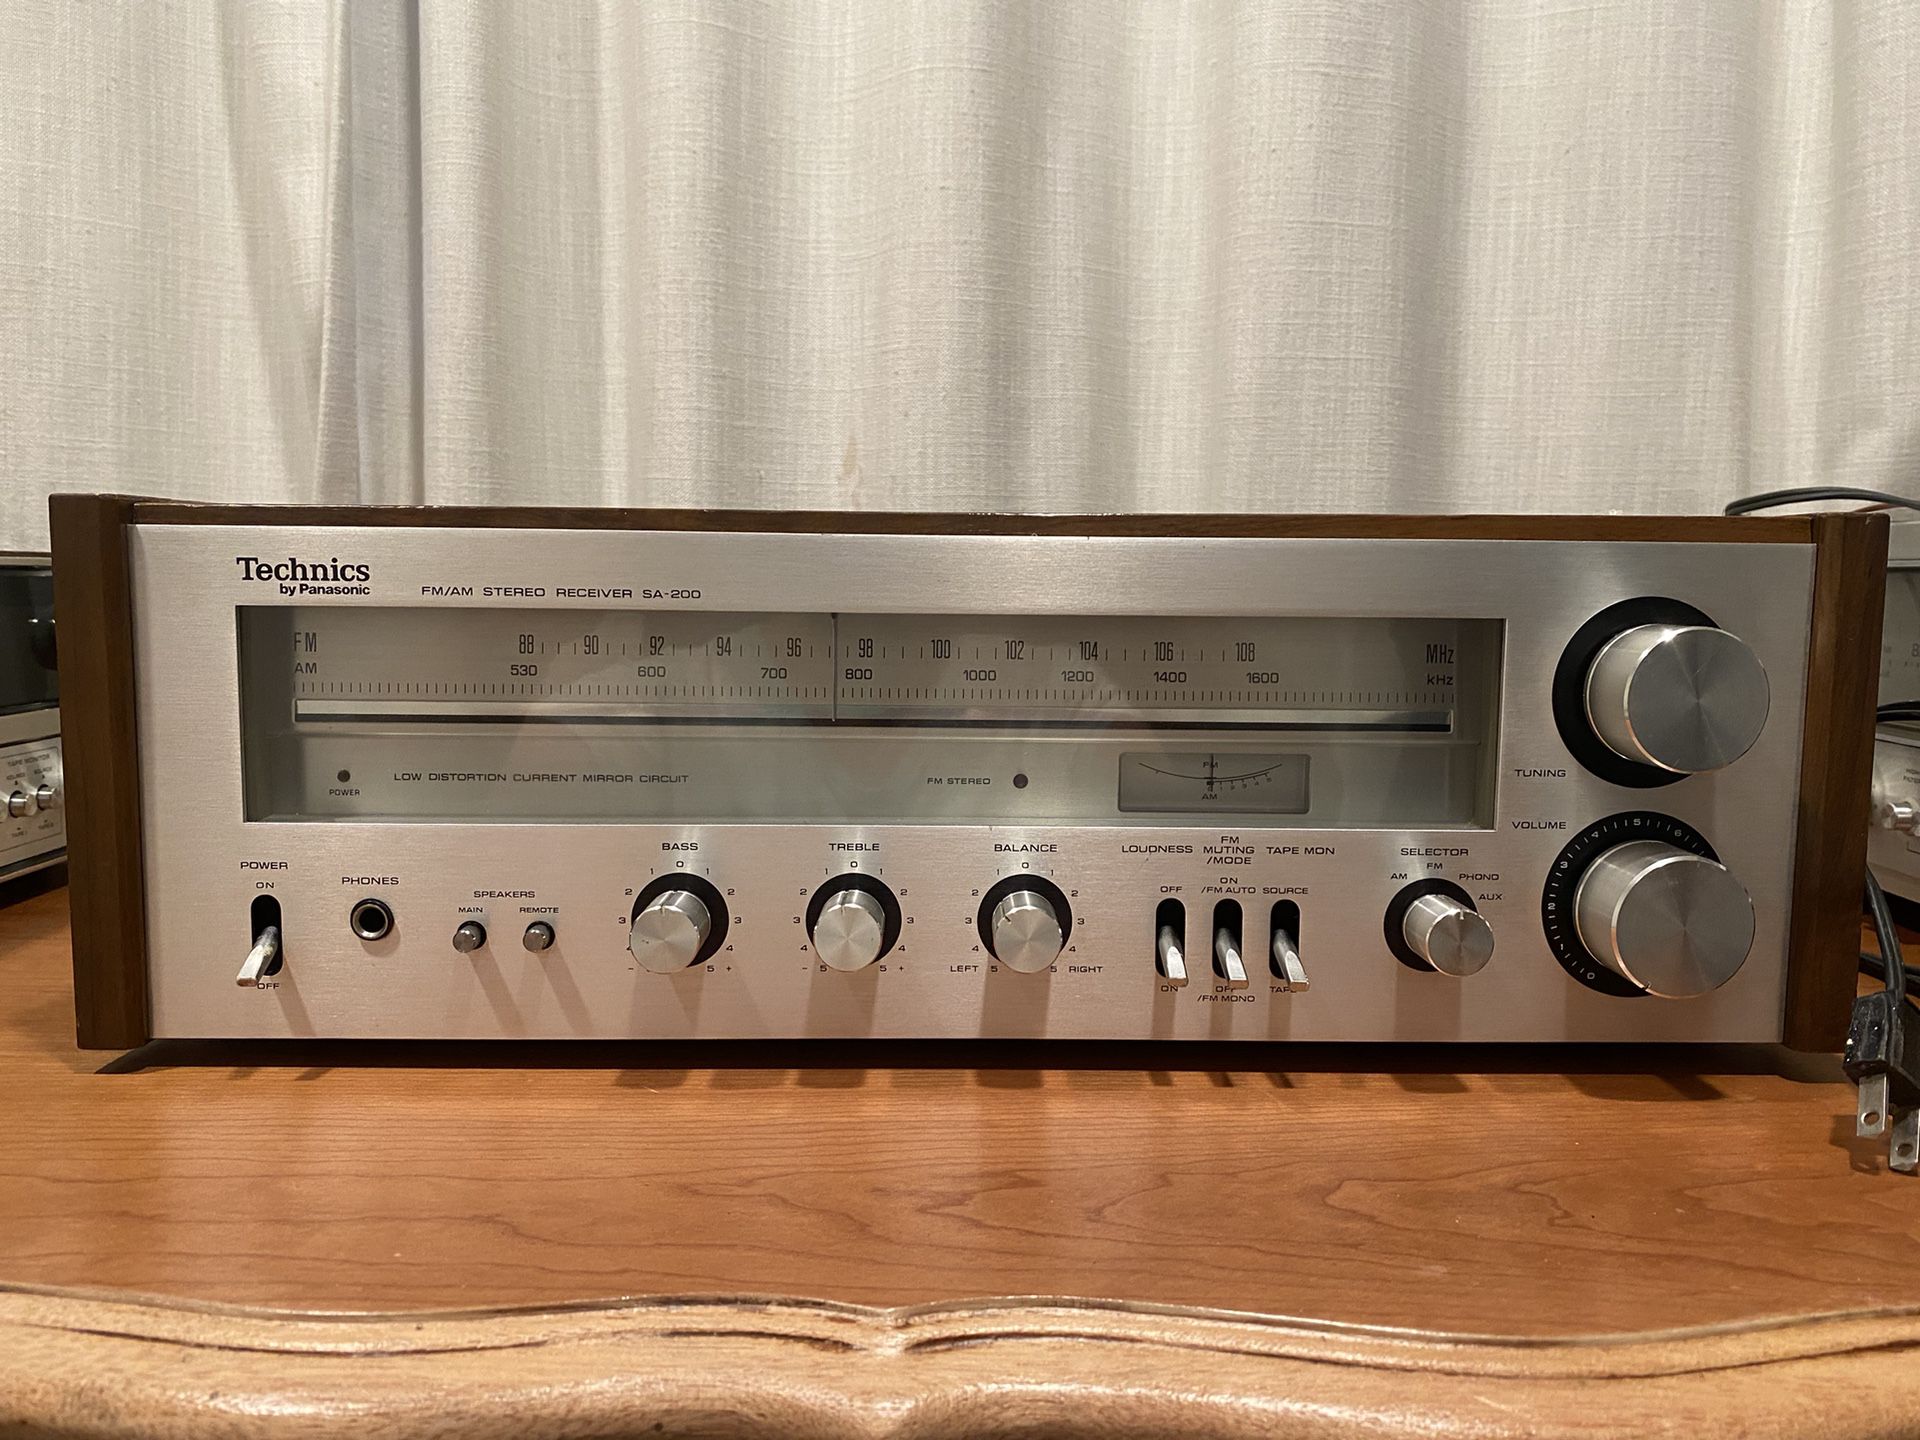 Panasonic Technics SA-200 FM/AM Stereo Receiver 